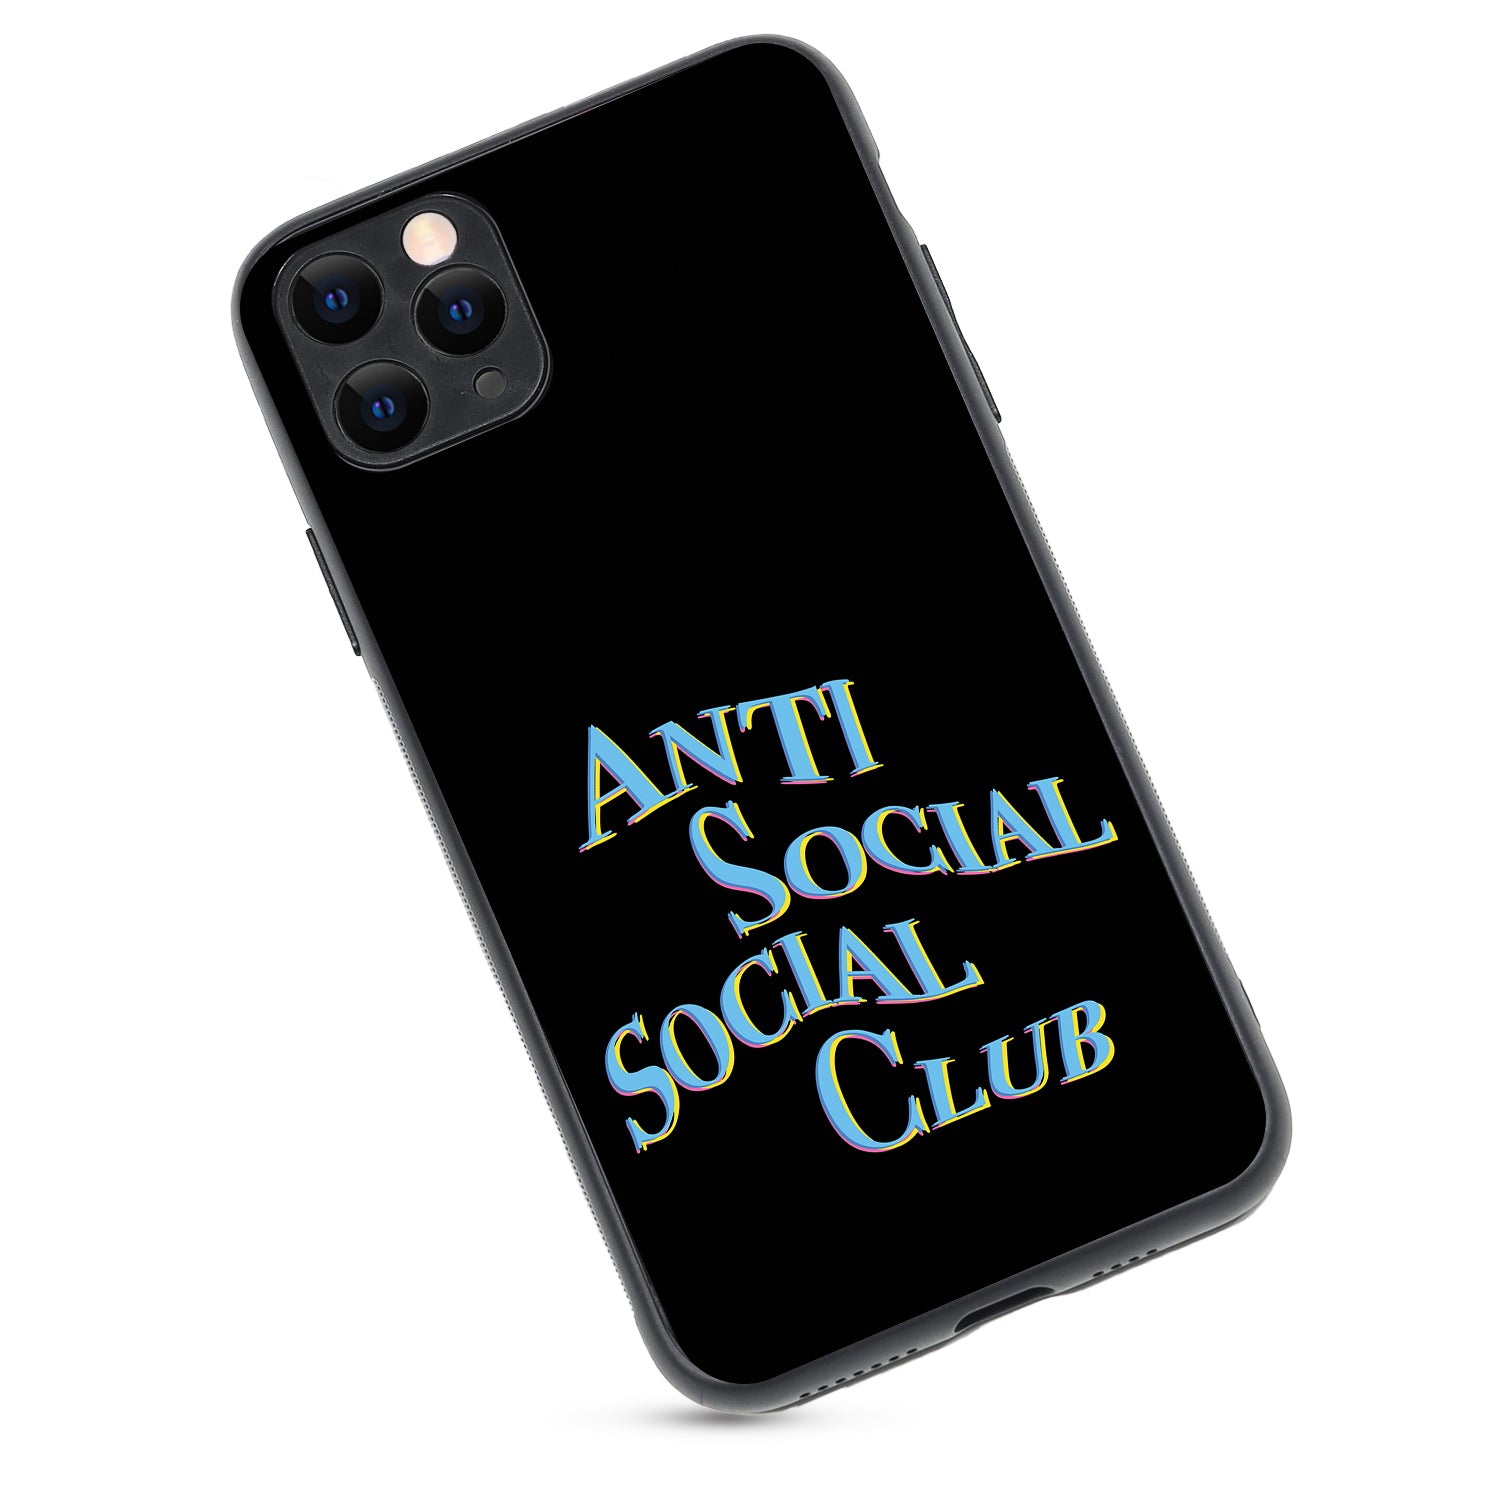 Social Club Black Motivational Quotes iPhone 11 Pro Max Case